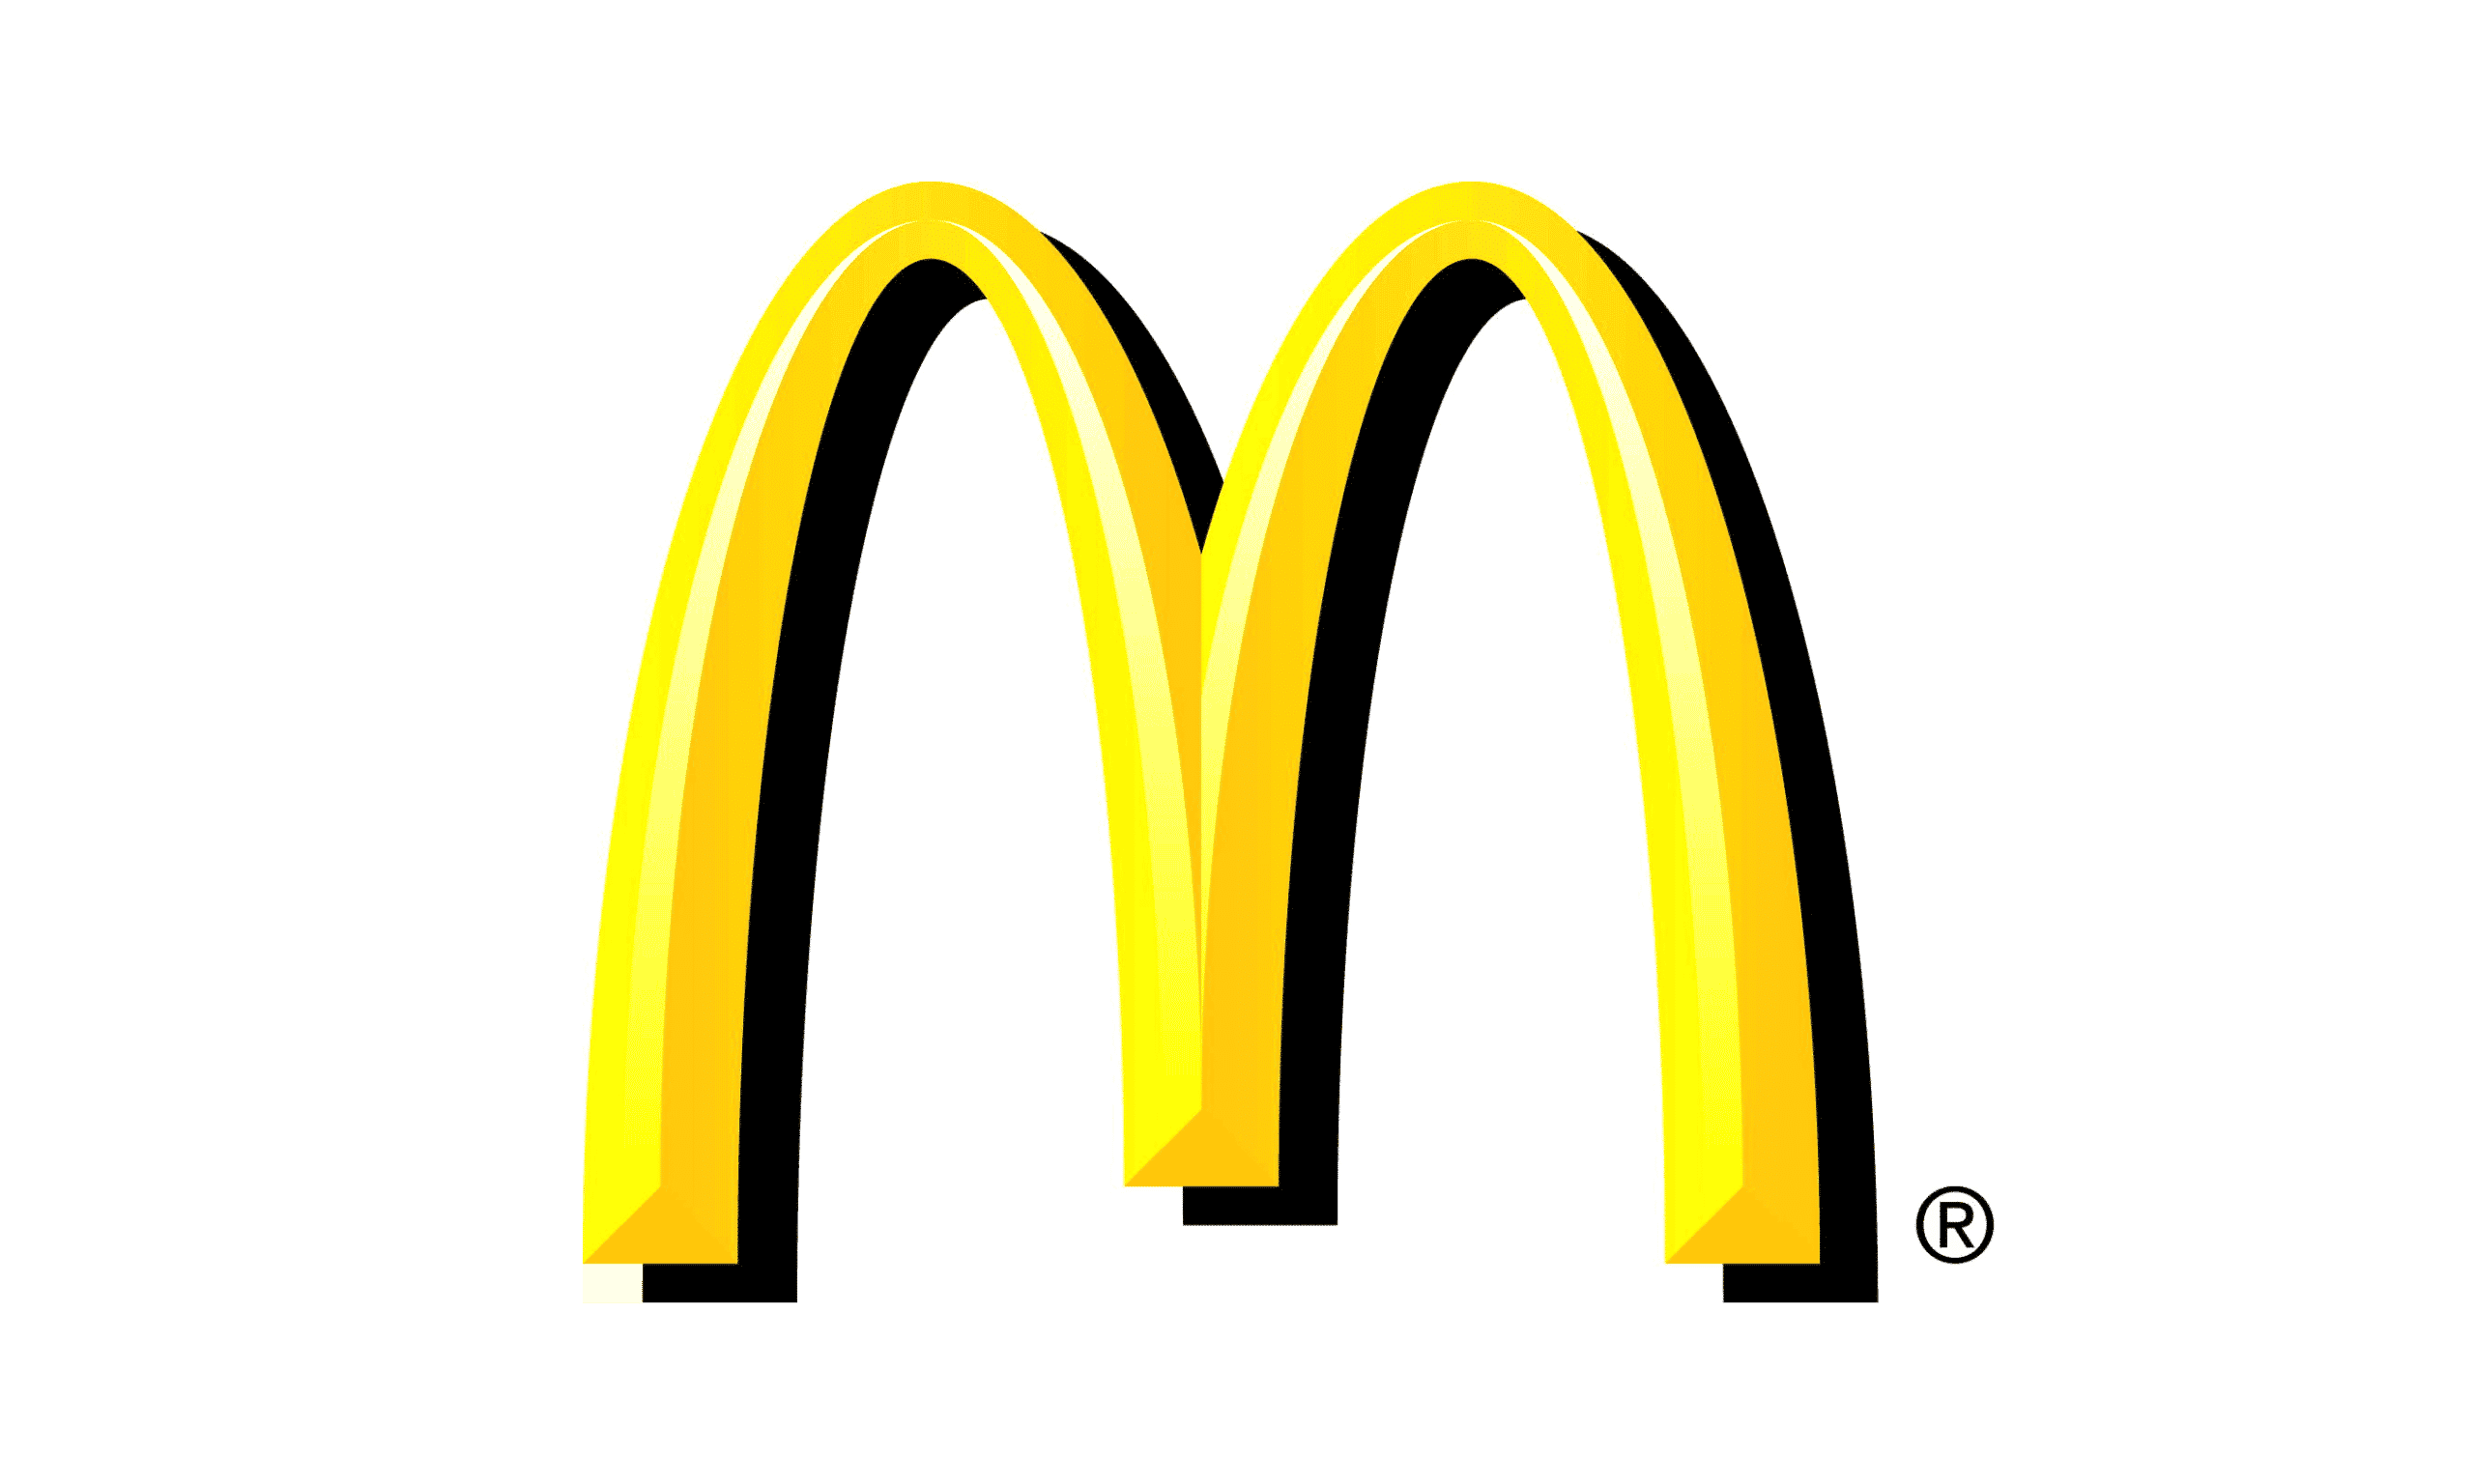 McDonalds commercial stone veneer installer Arizona